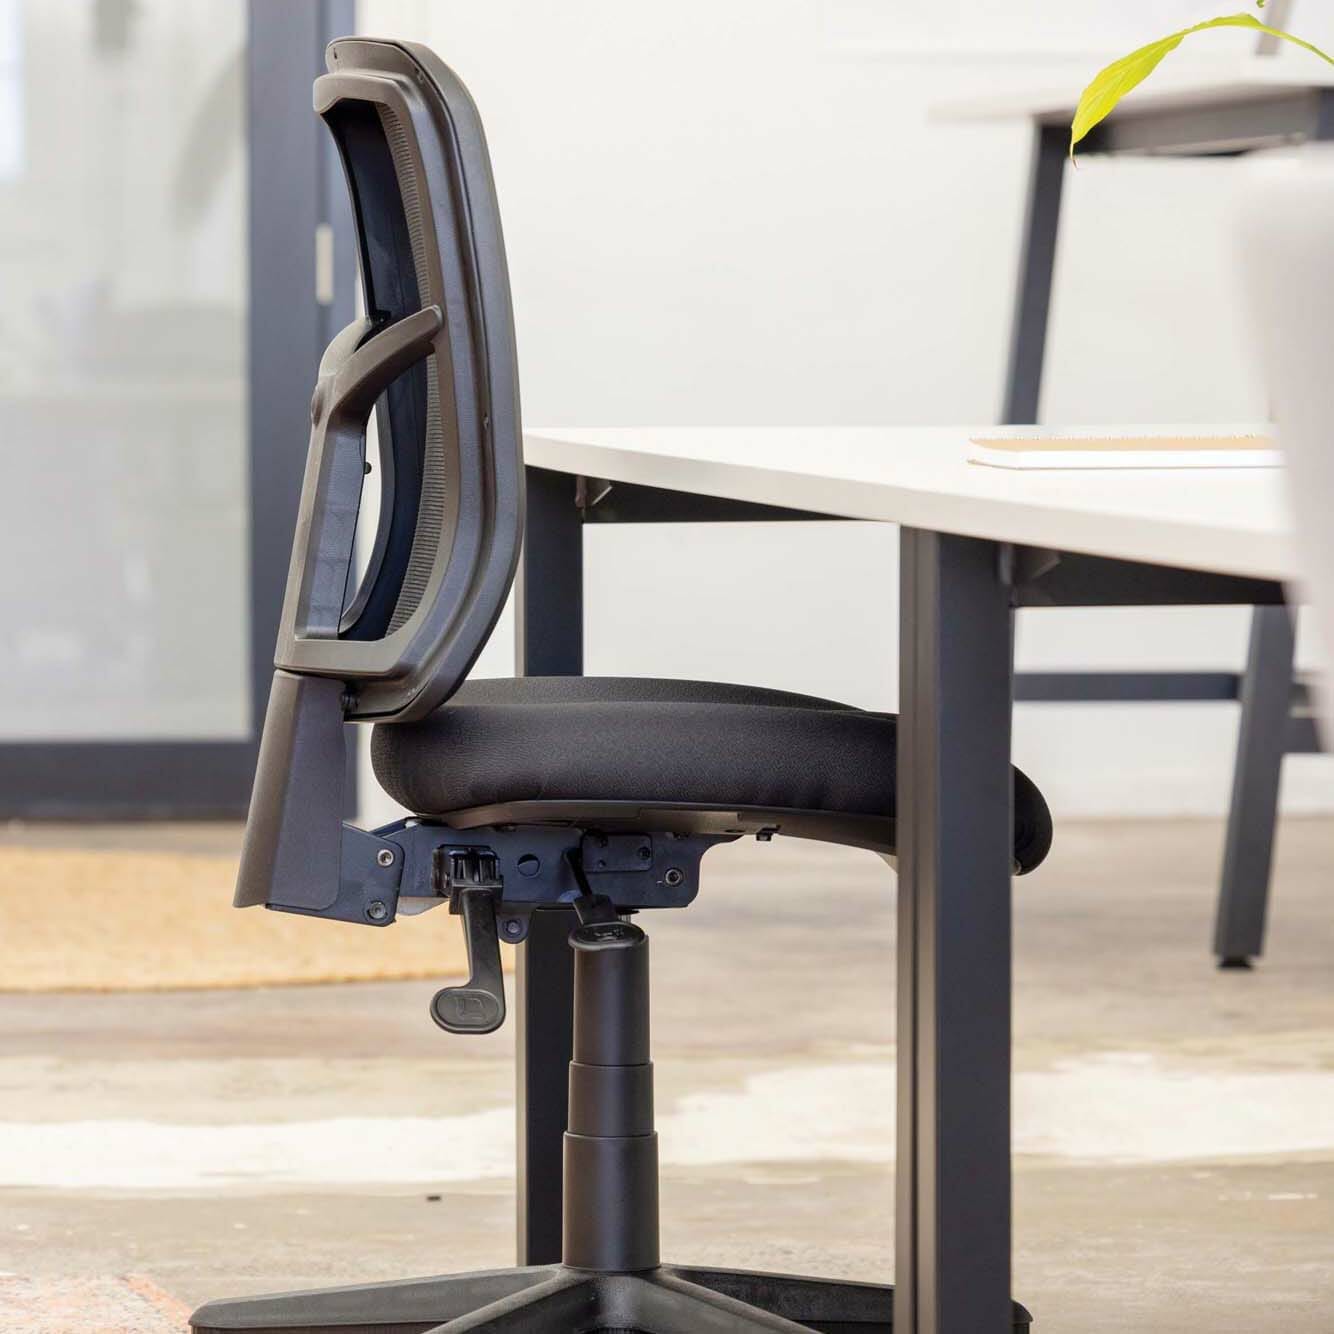 mondo tivoli office chair at desk with laptop